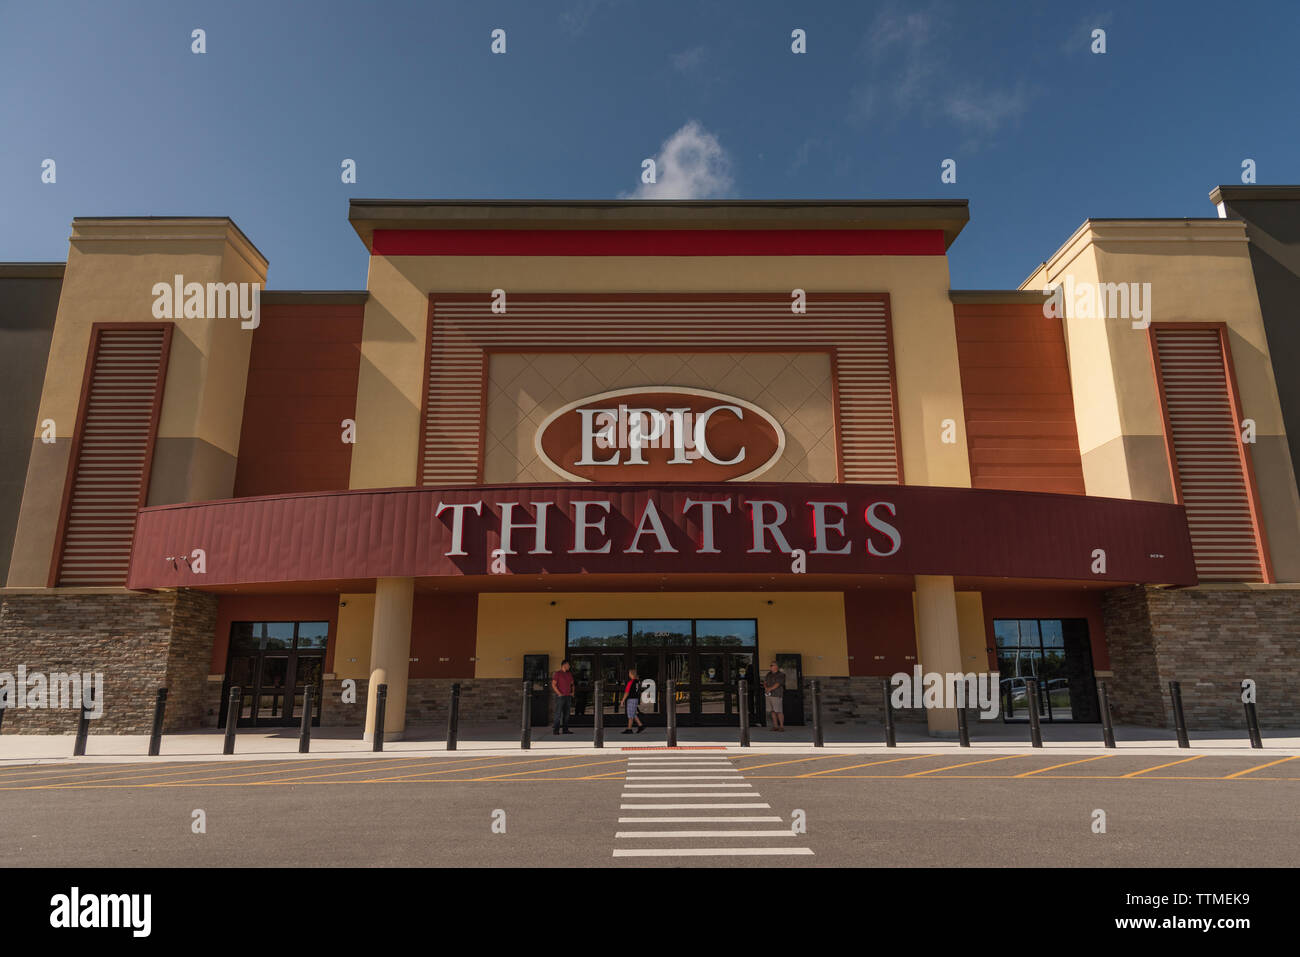 Epic Theatres Movie Theater Exterior Building Entrance Stock Photo - Alamy